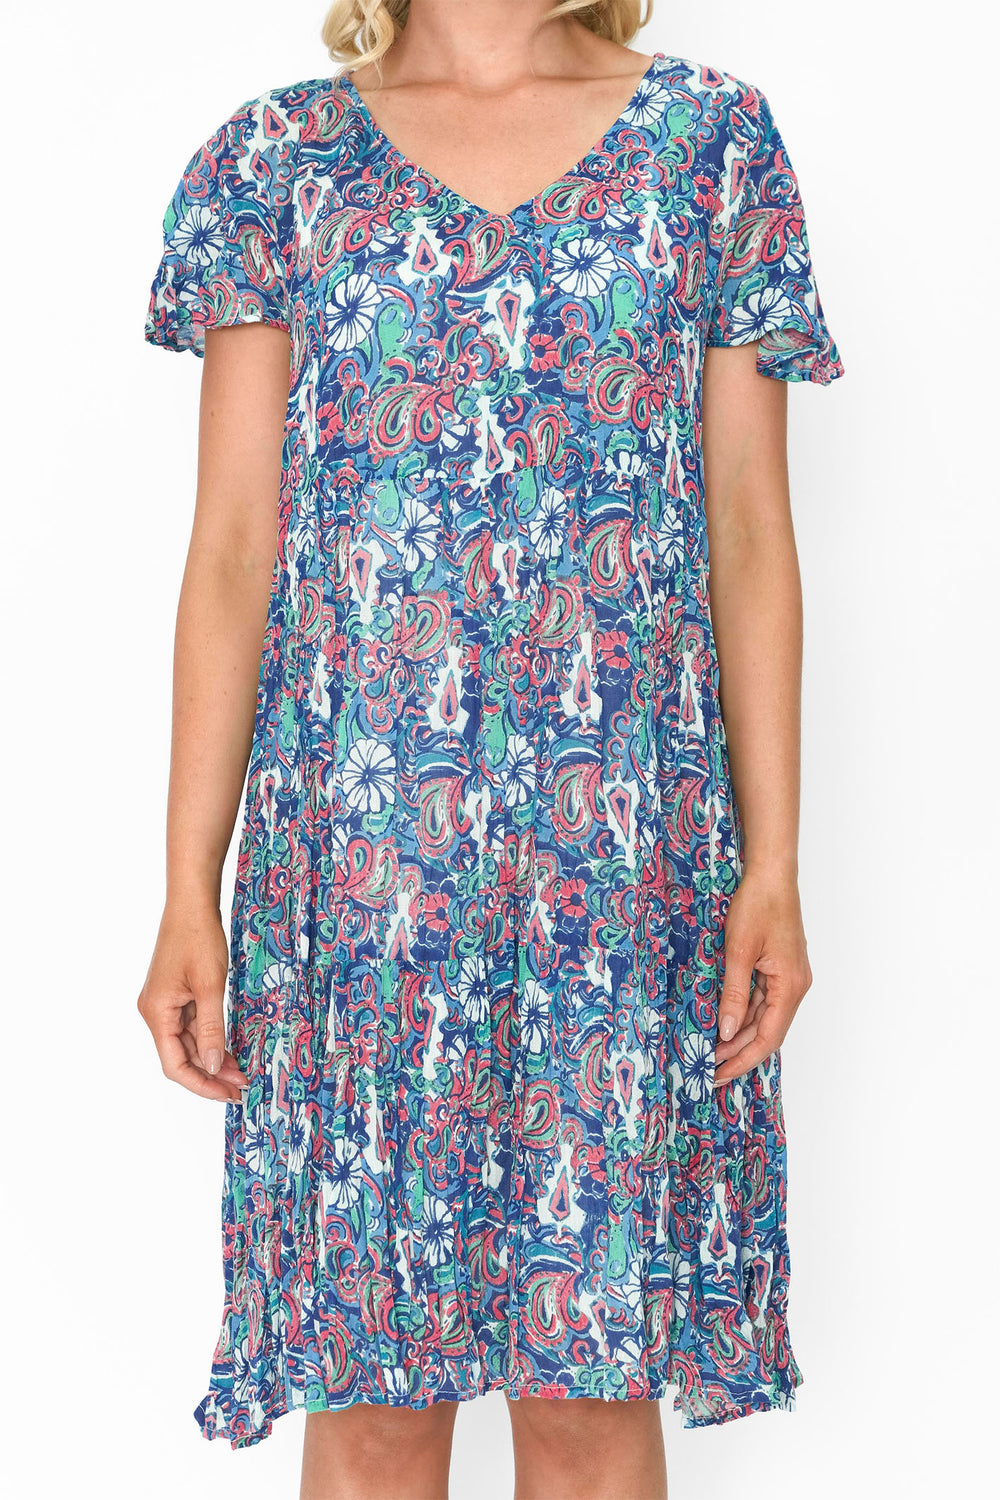 One Summer Kimberly V-Neck Dress DW71F Print 7 Blue Short Sleeve - Dotique